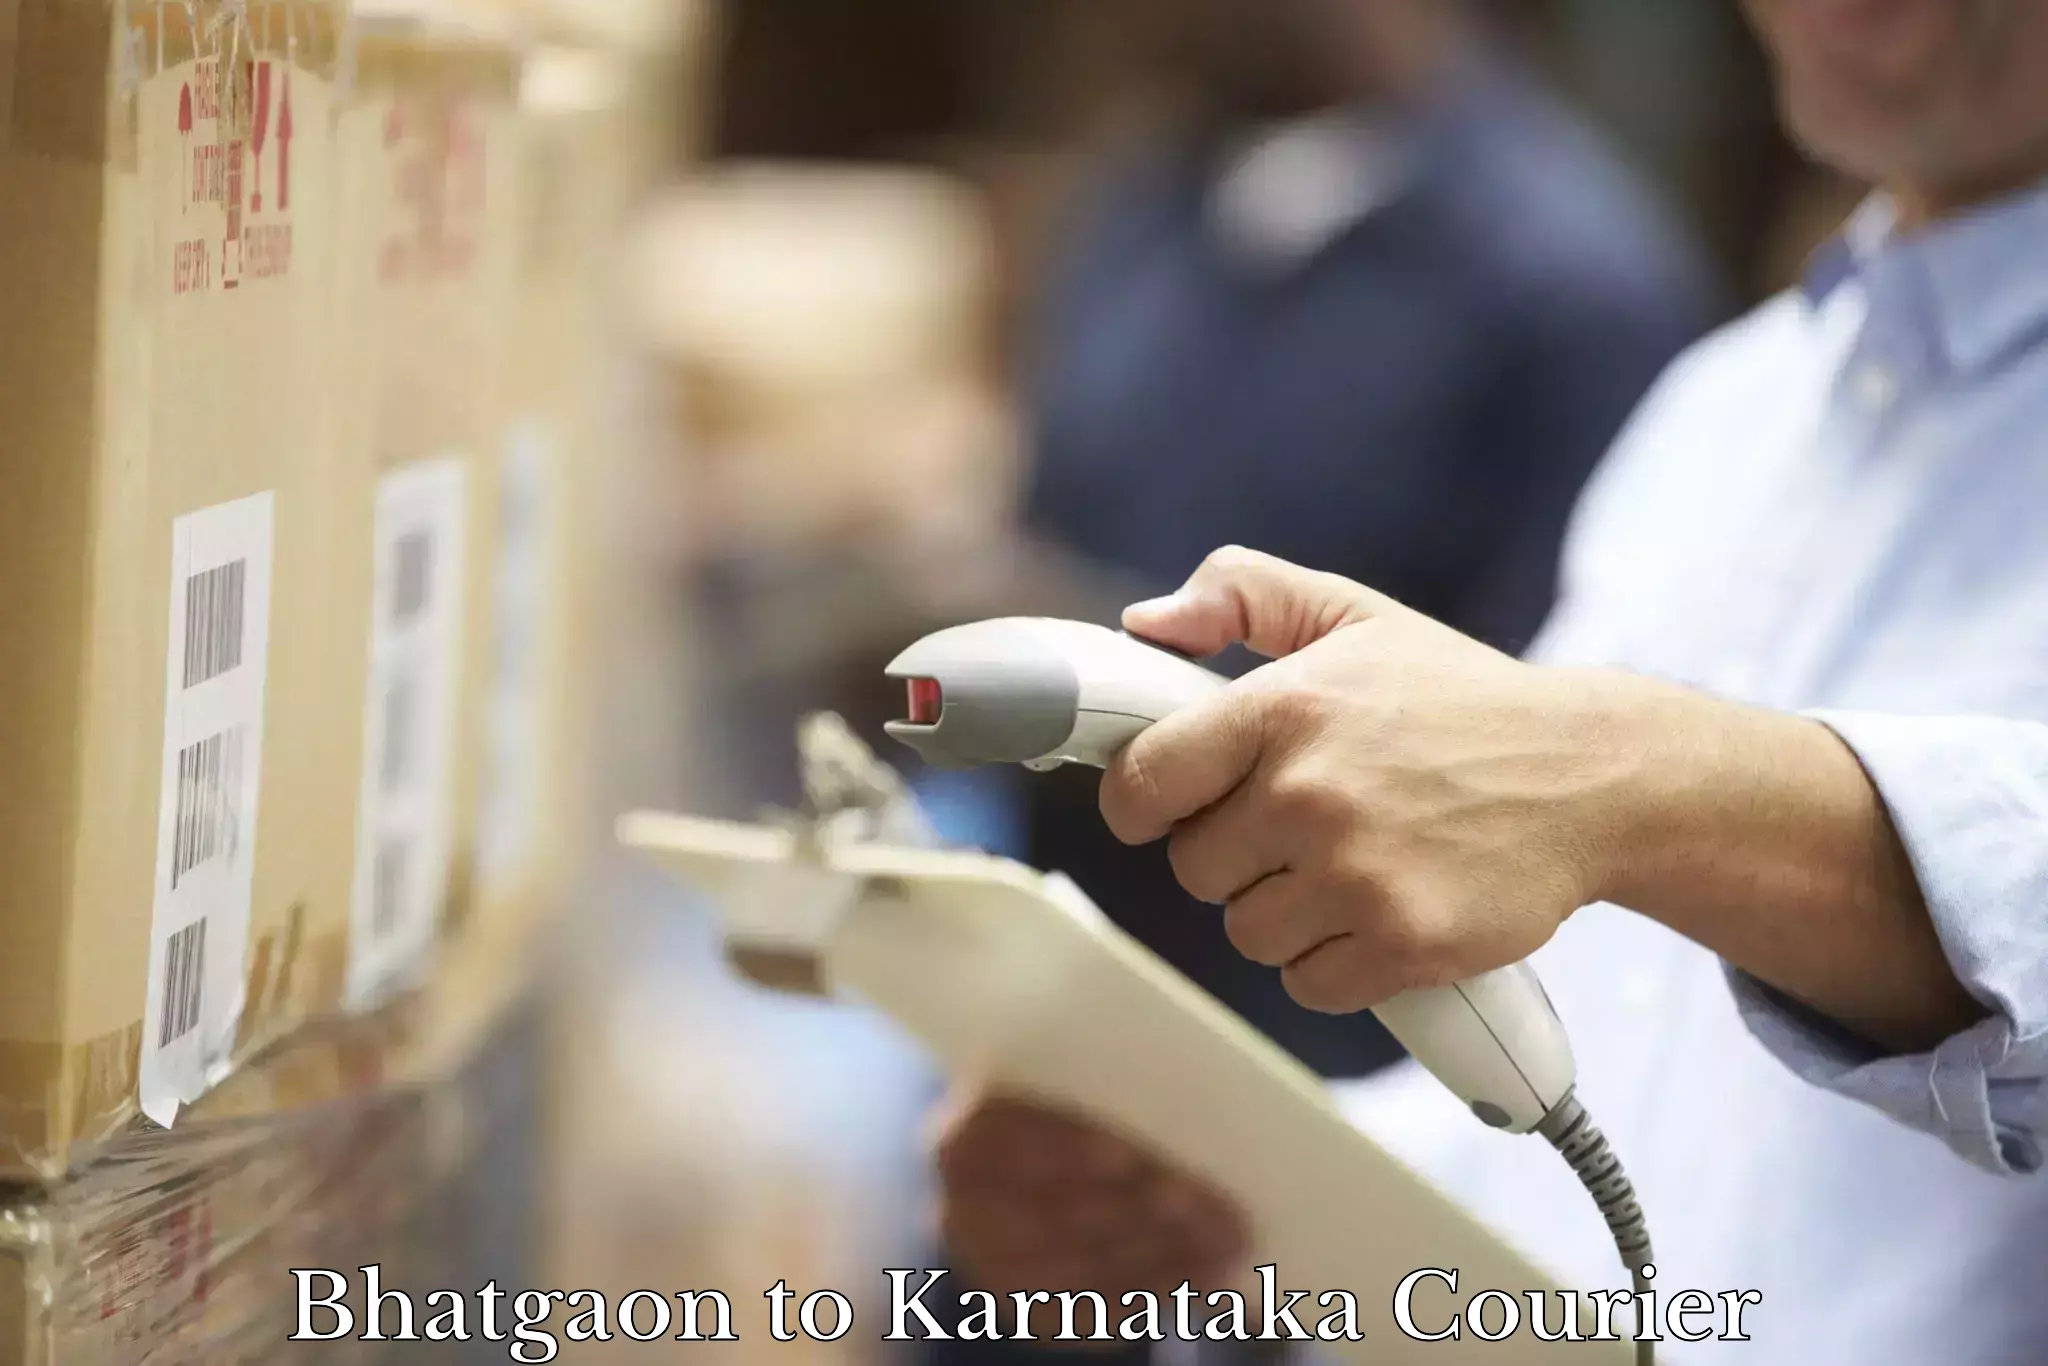 Courier service innovation Bhatgaon to Hubli